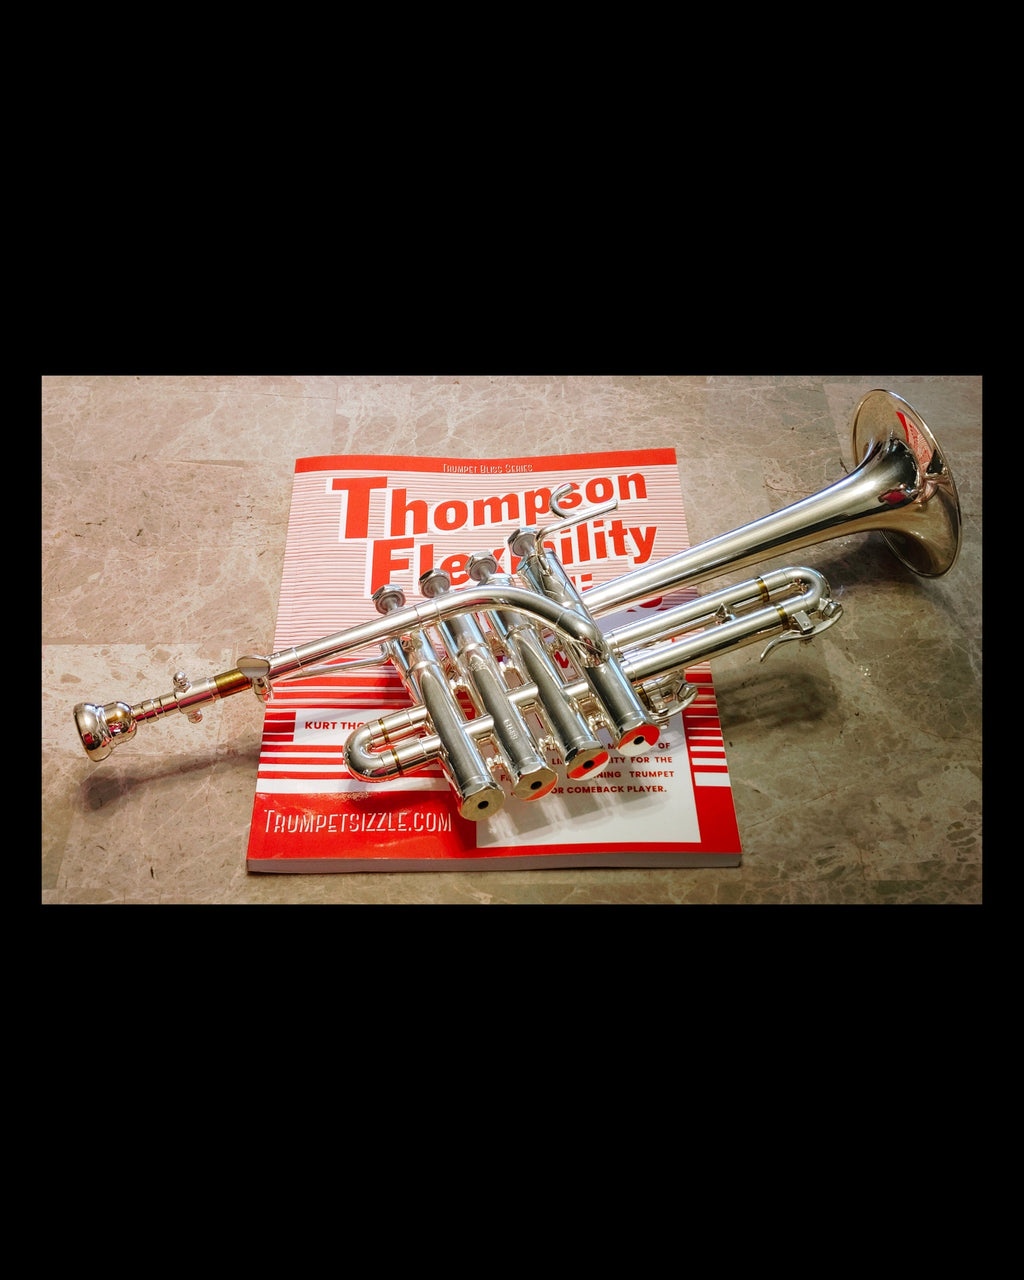 Thompson Flexibility Studies Vol. 2 (trumpet book)